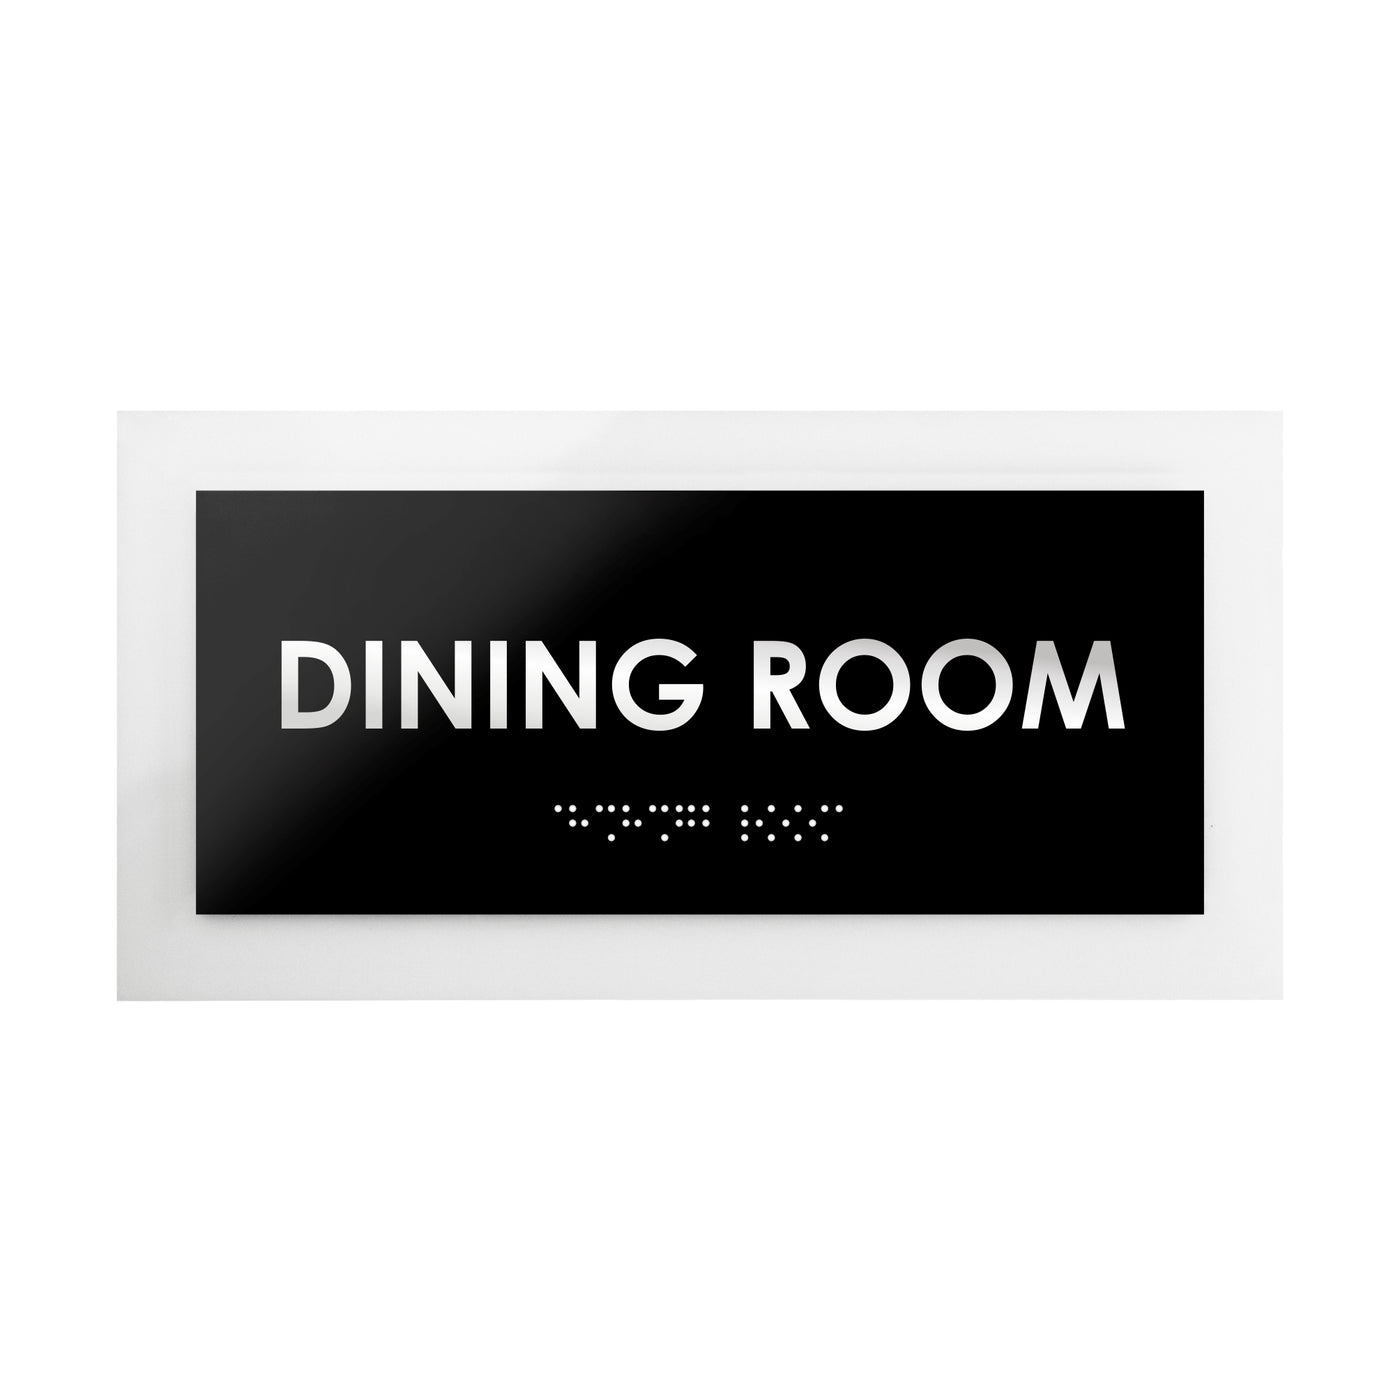 Acrylic Dining Room Door Sign - "Simple" Design